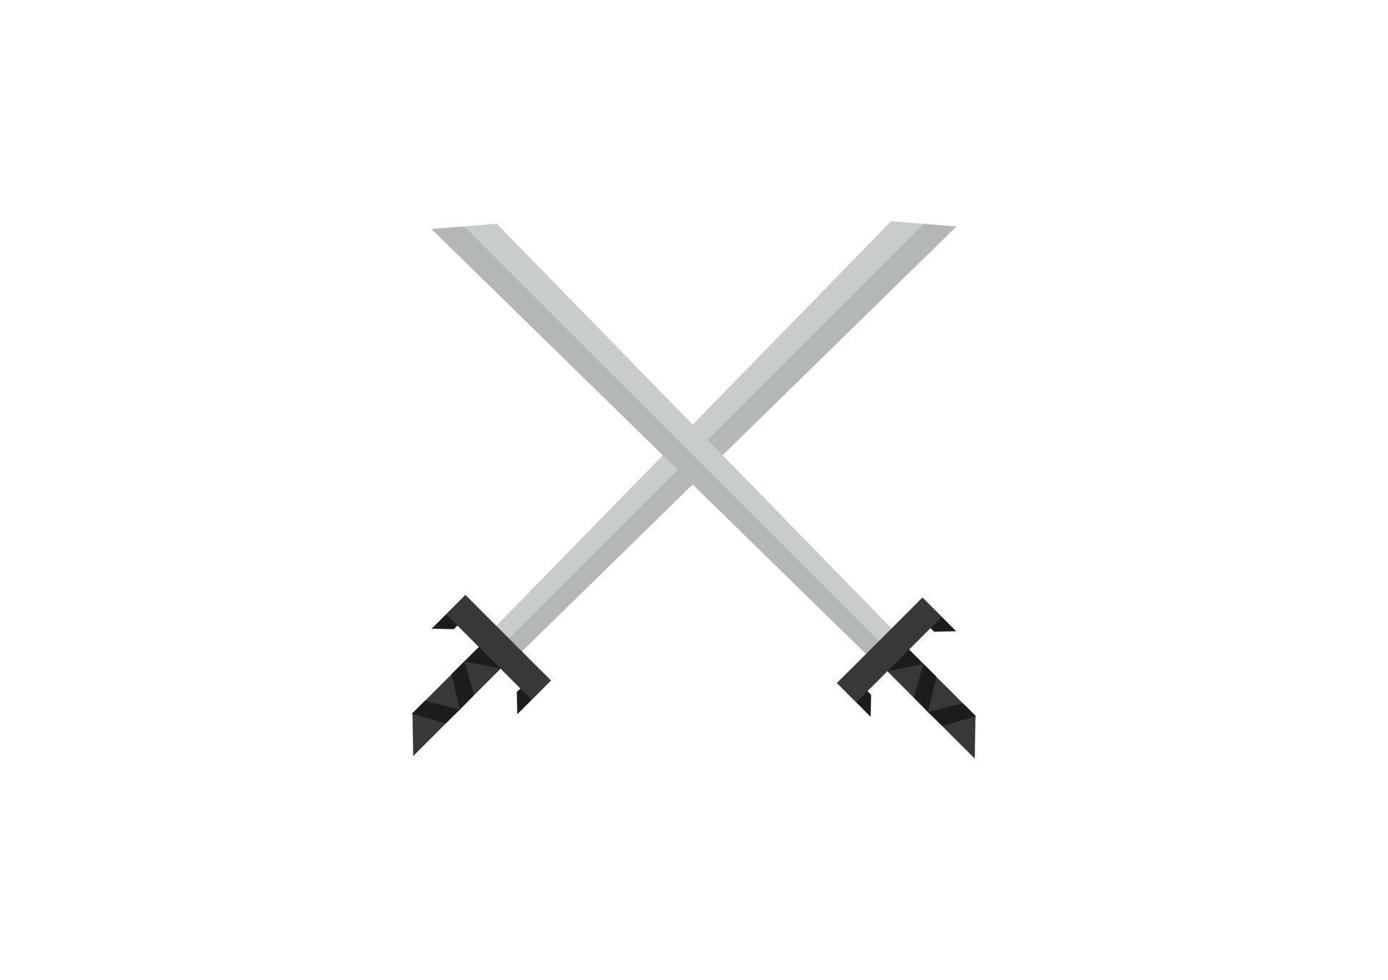 two swords illustration 3 vector